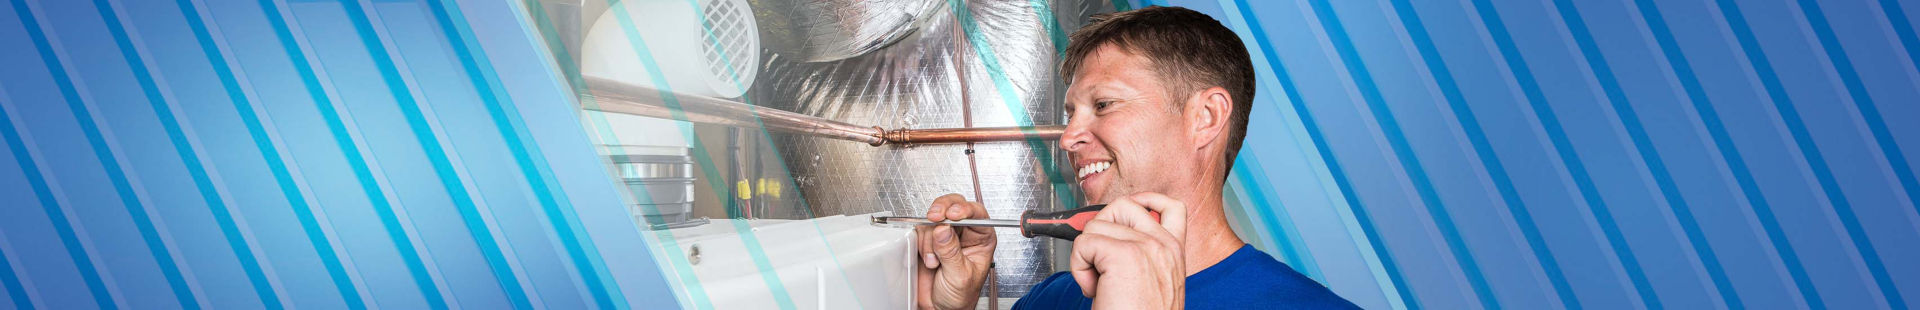 Plumber inspecting tankless water heater